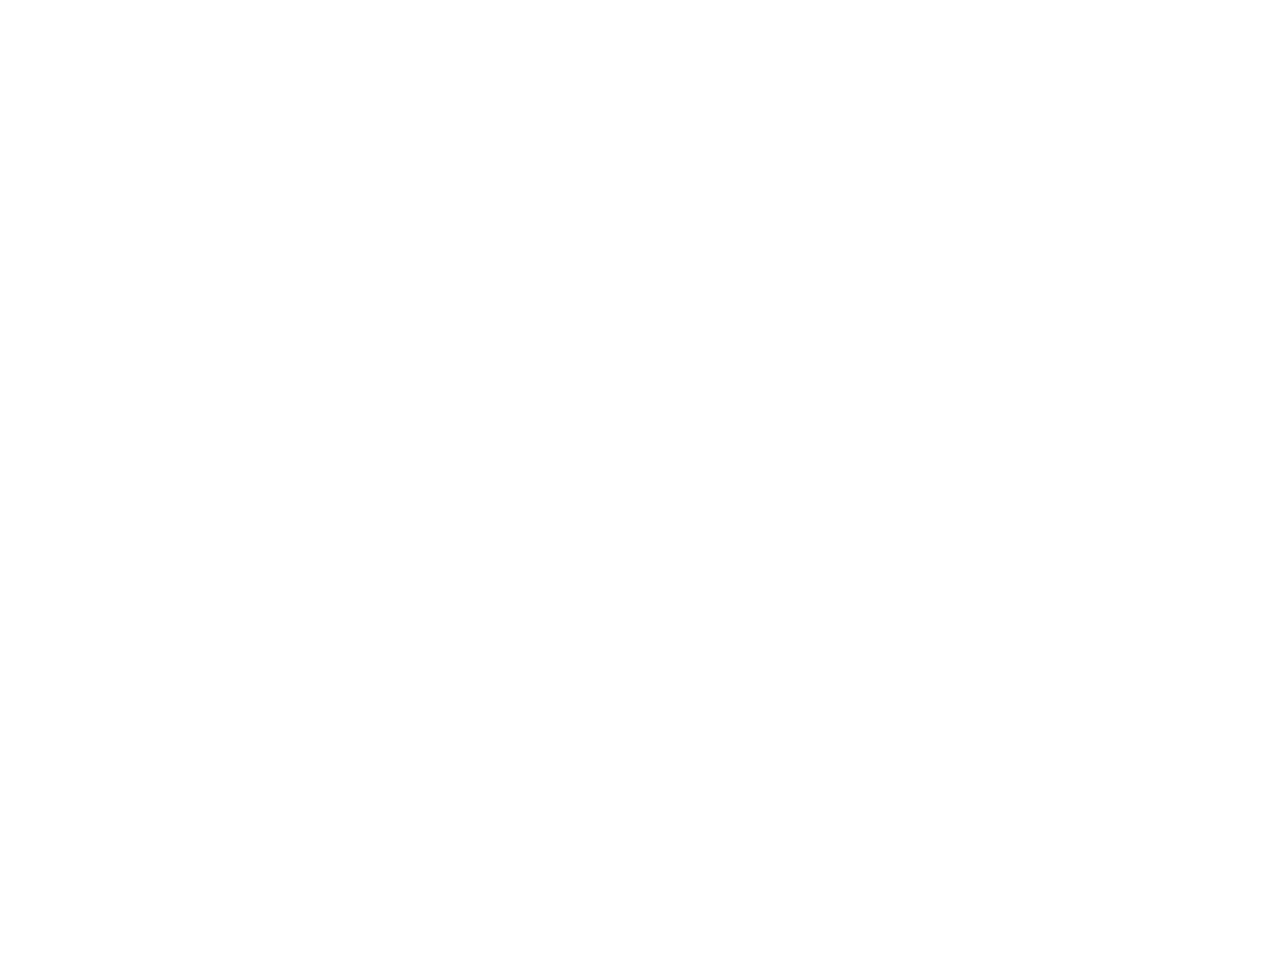 GEMELLIGGIO's logo